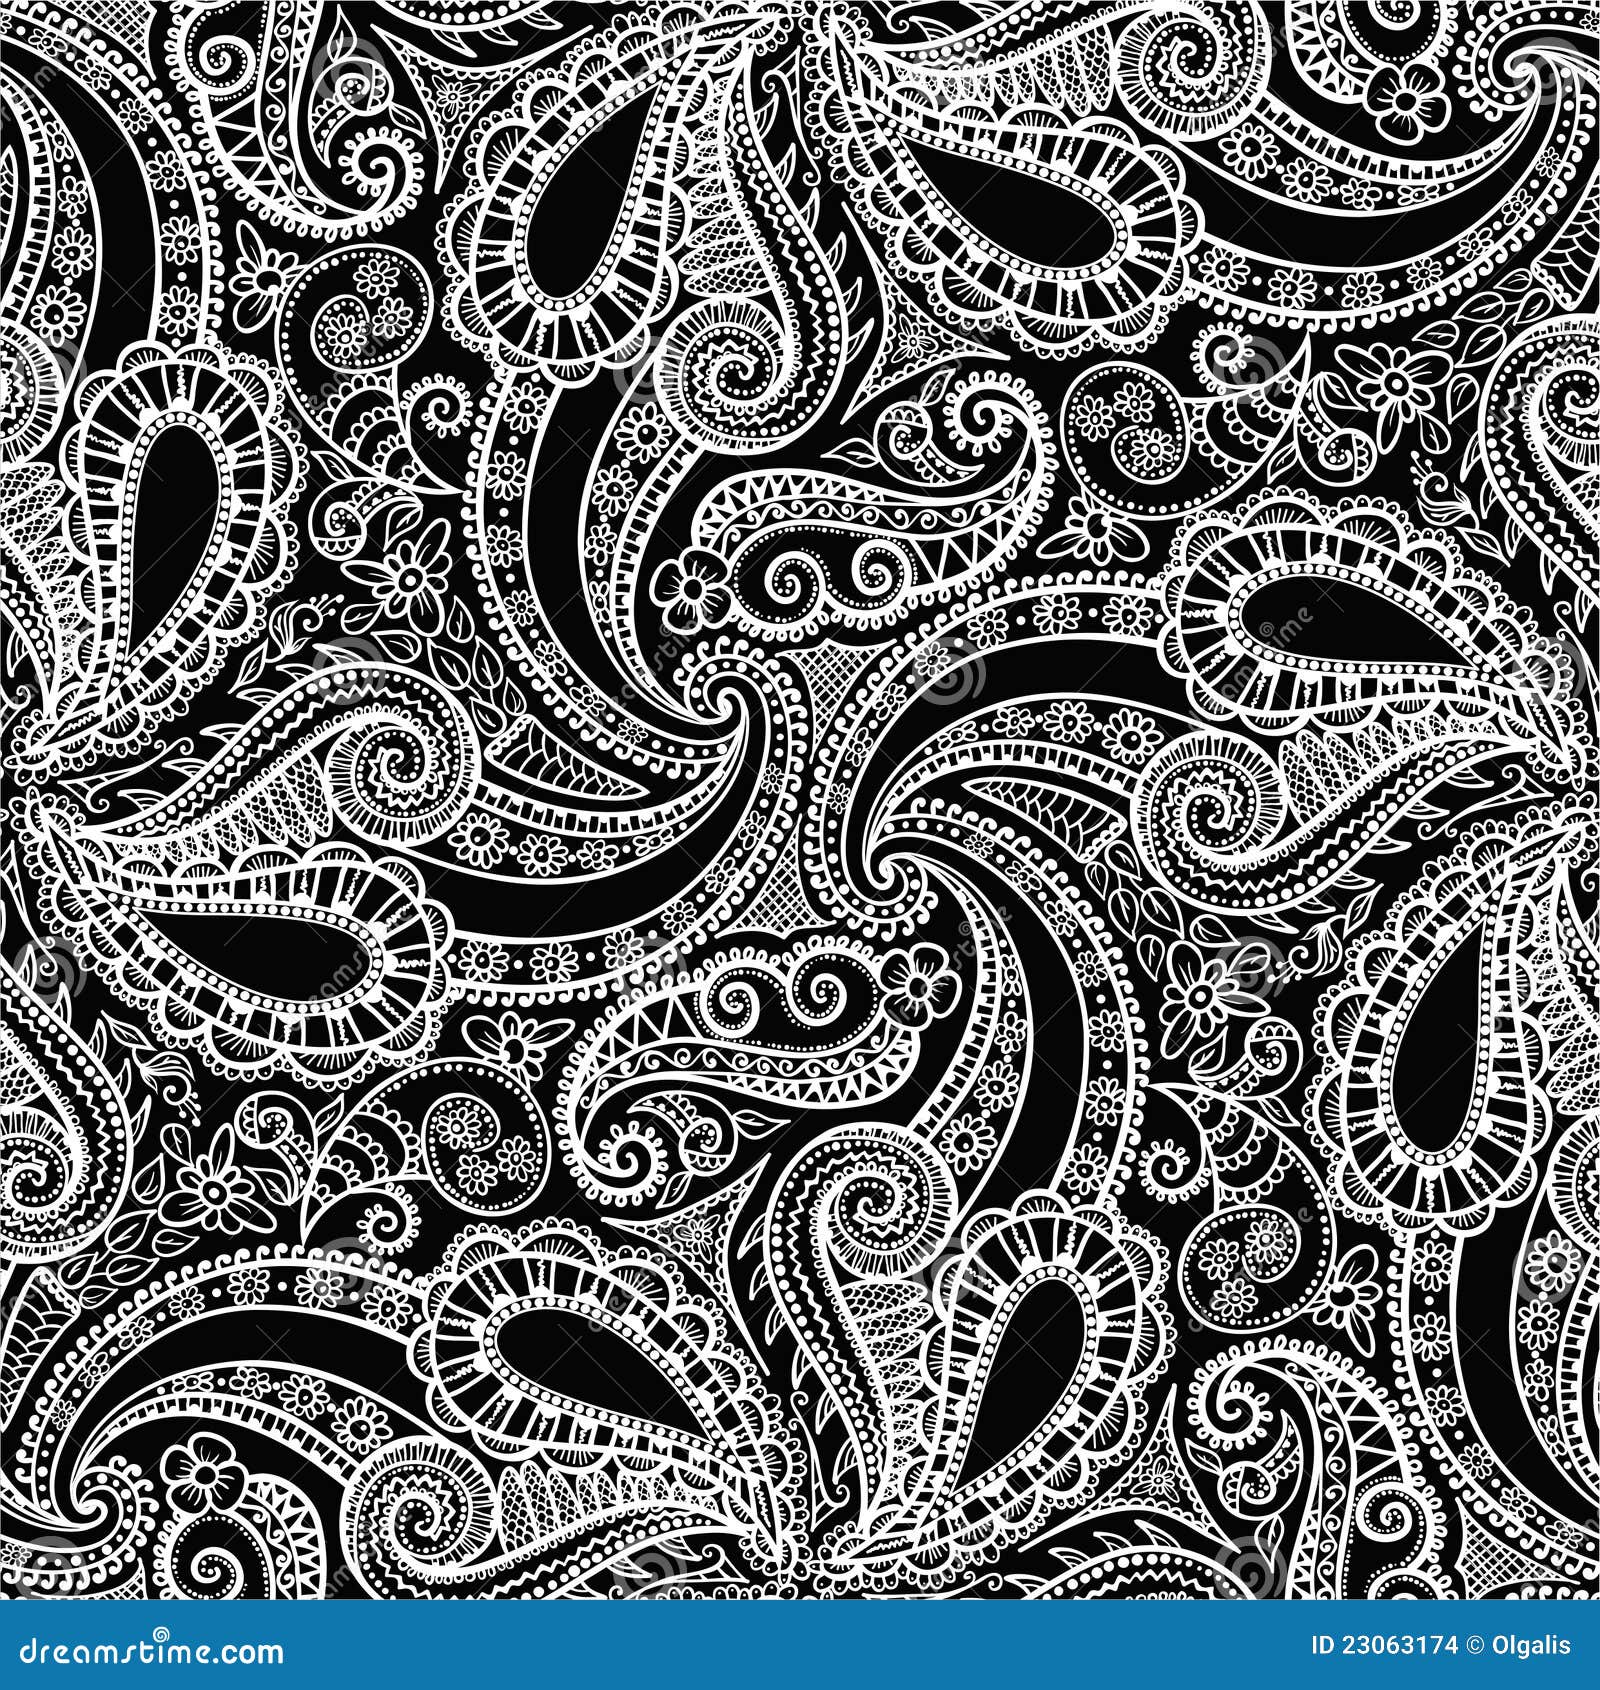 Seamless lace pattern stock illustration. Illustration of graphic ...